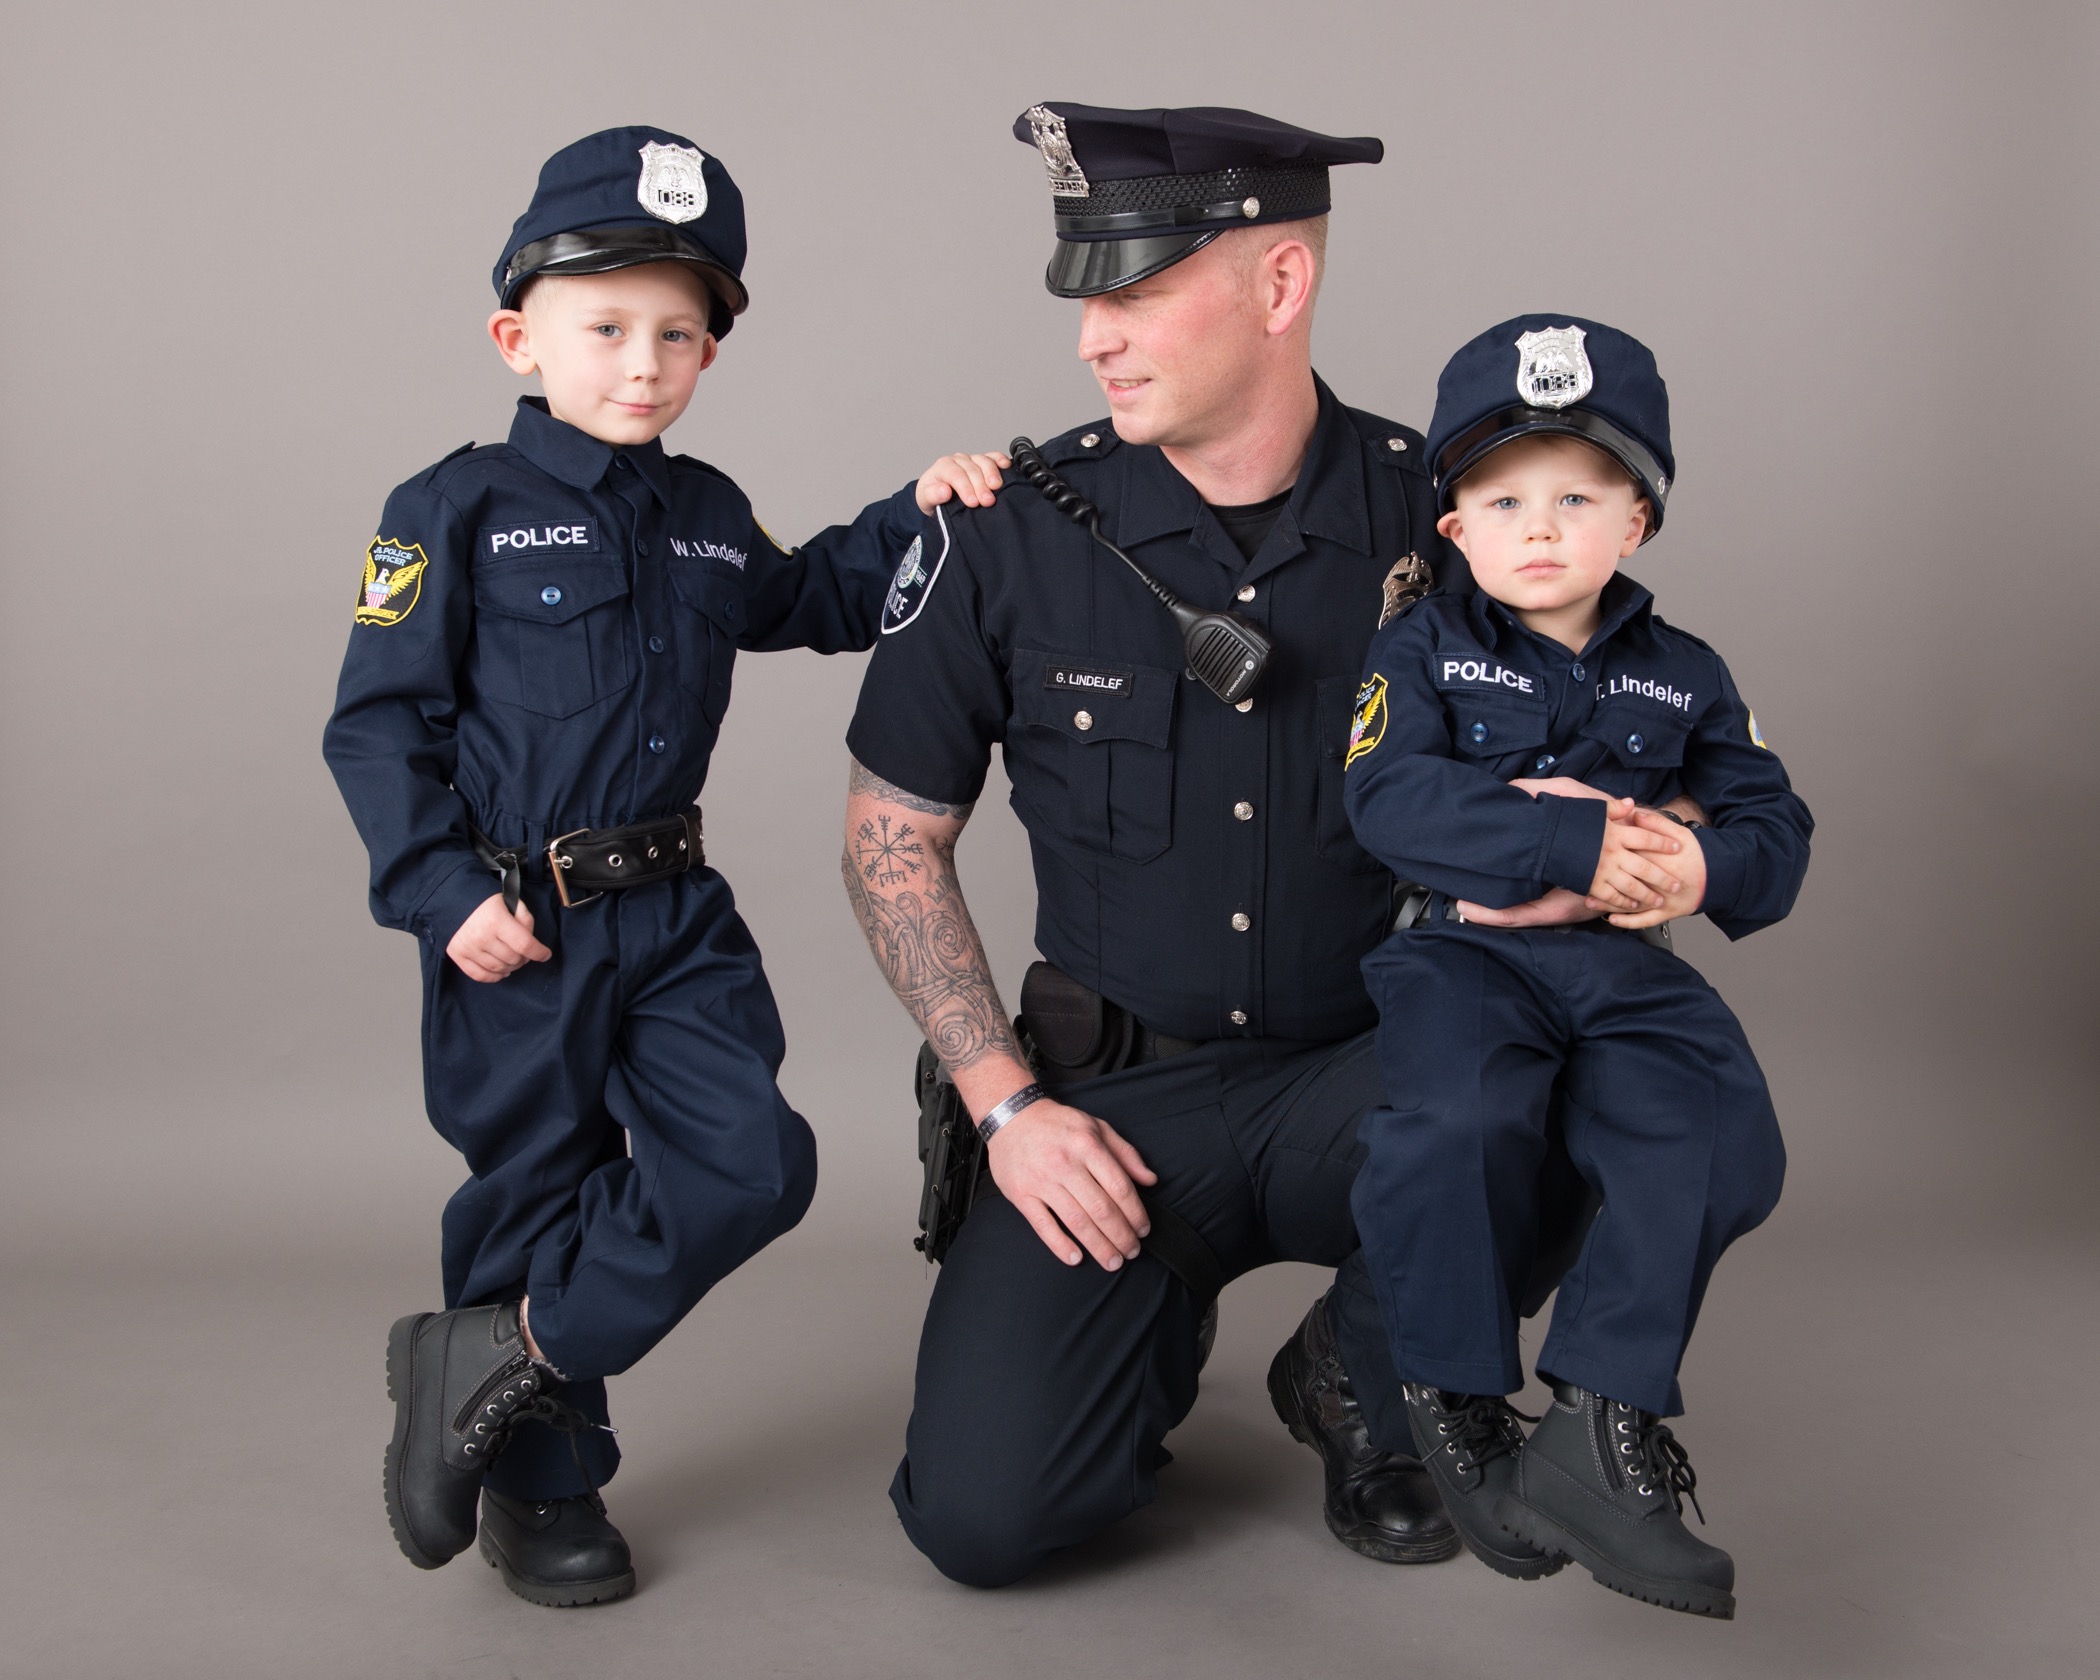 police gear